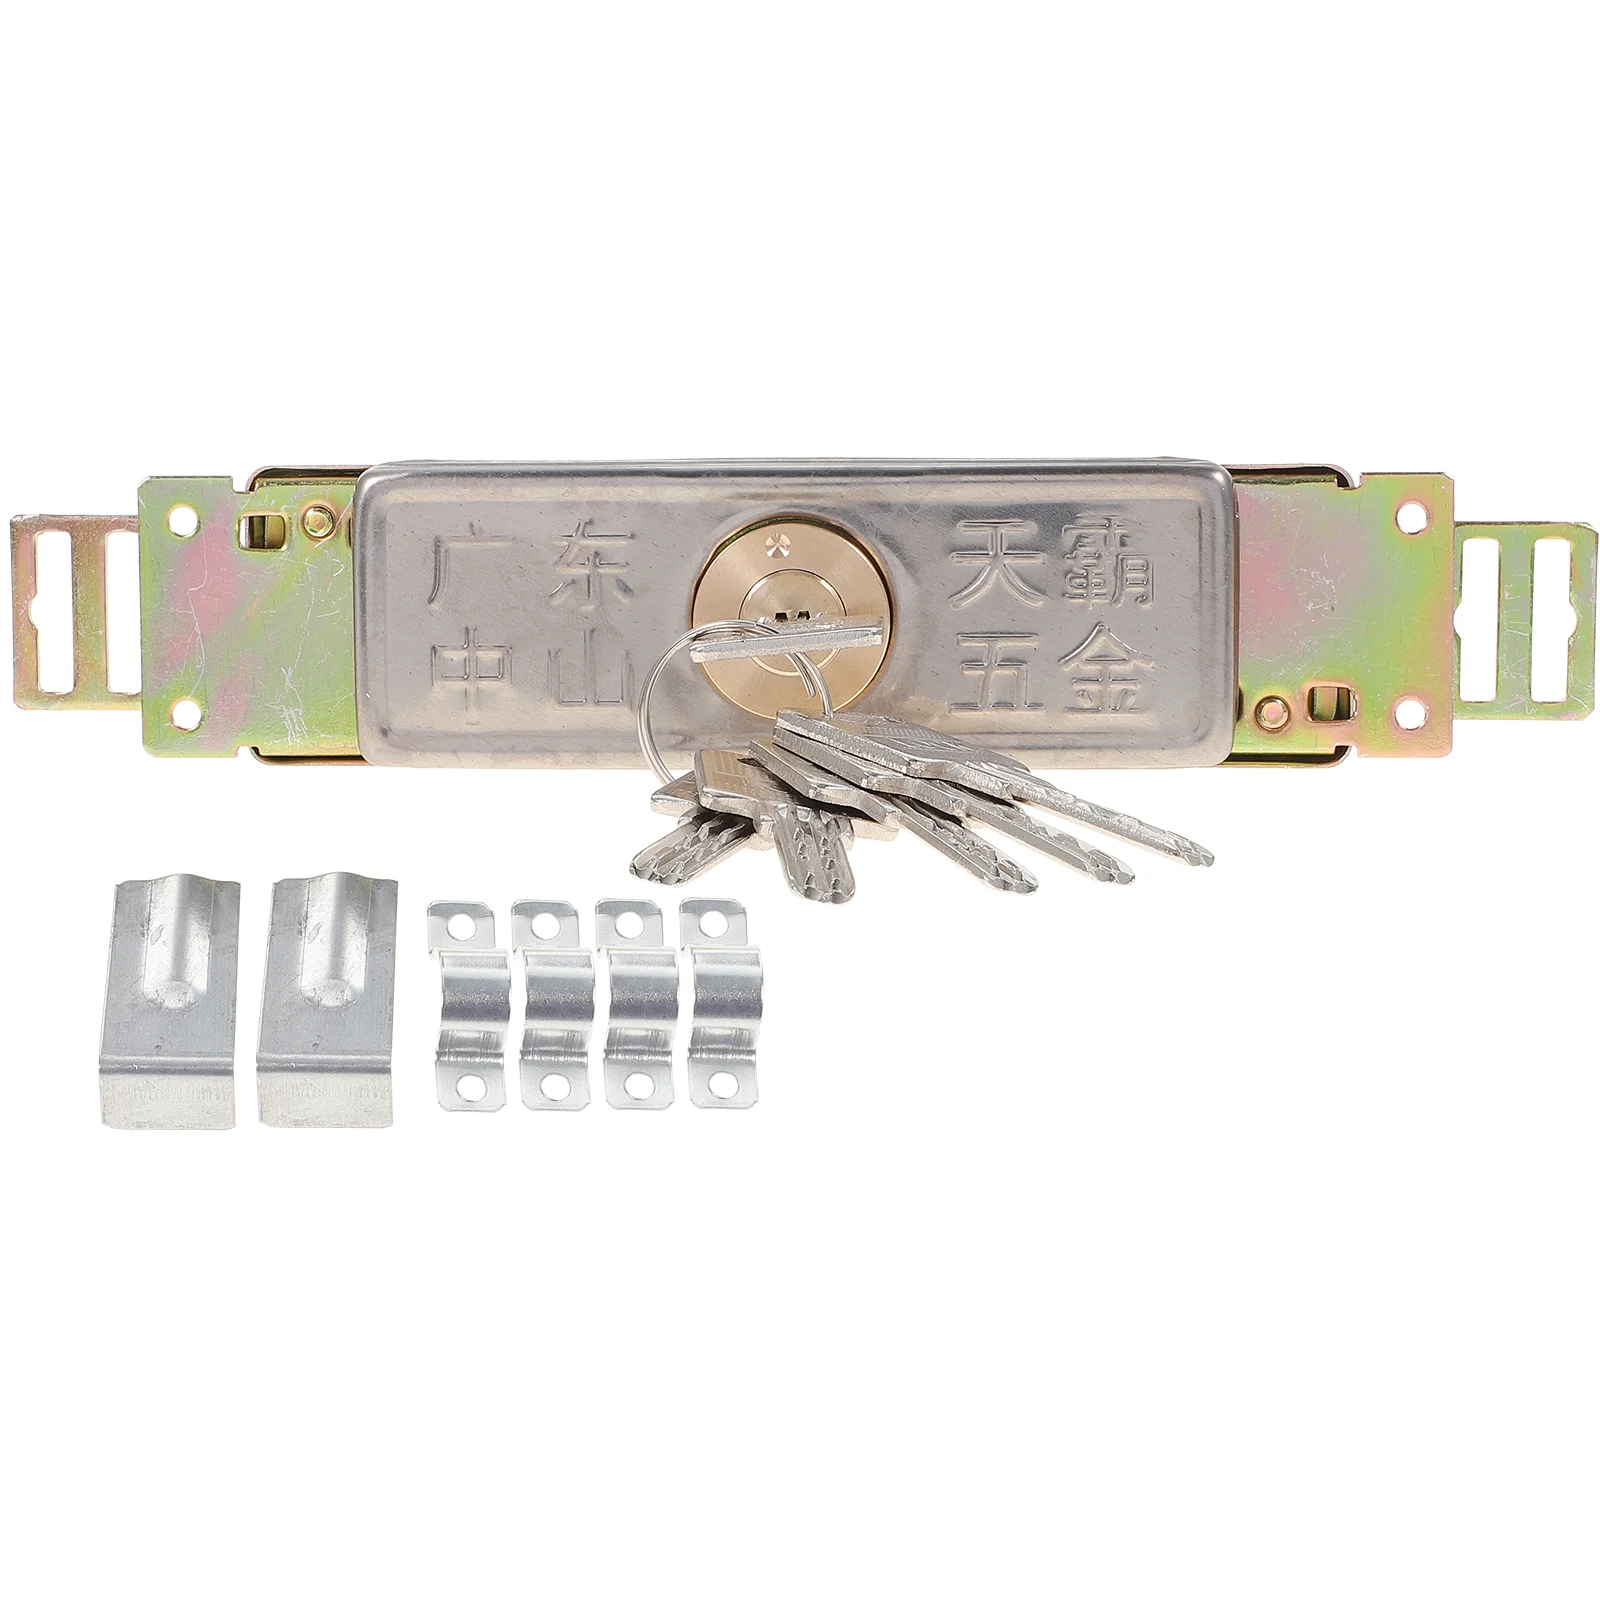 

Door Garage Lock Vertical Roller Shutter Keyway Rolling Locks Replacement Parts T Handle Locking Slide Latches Home Keys Gate